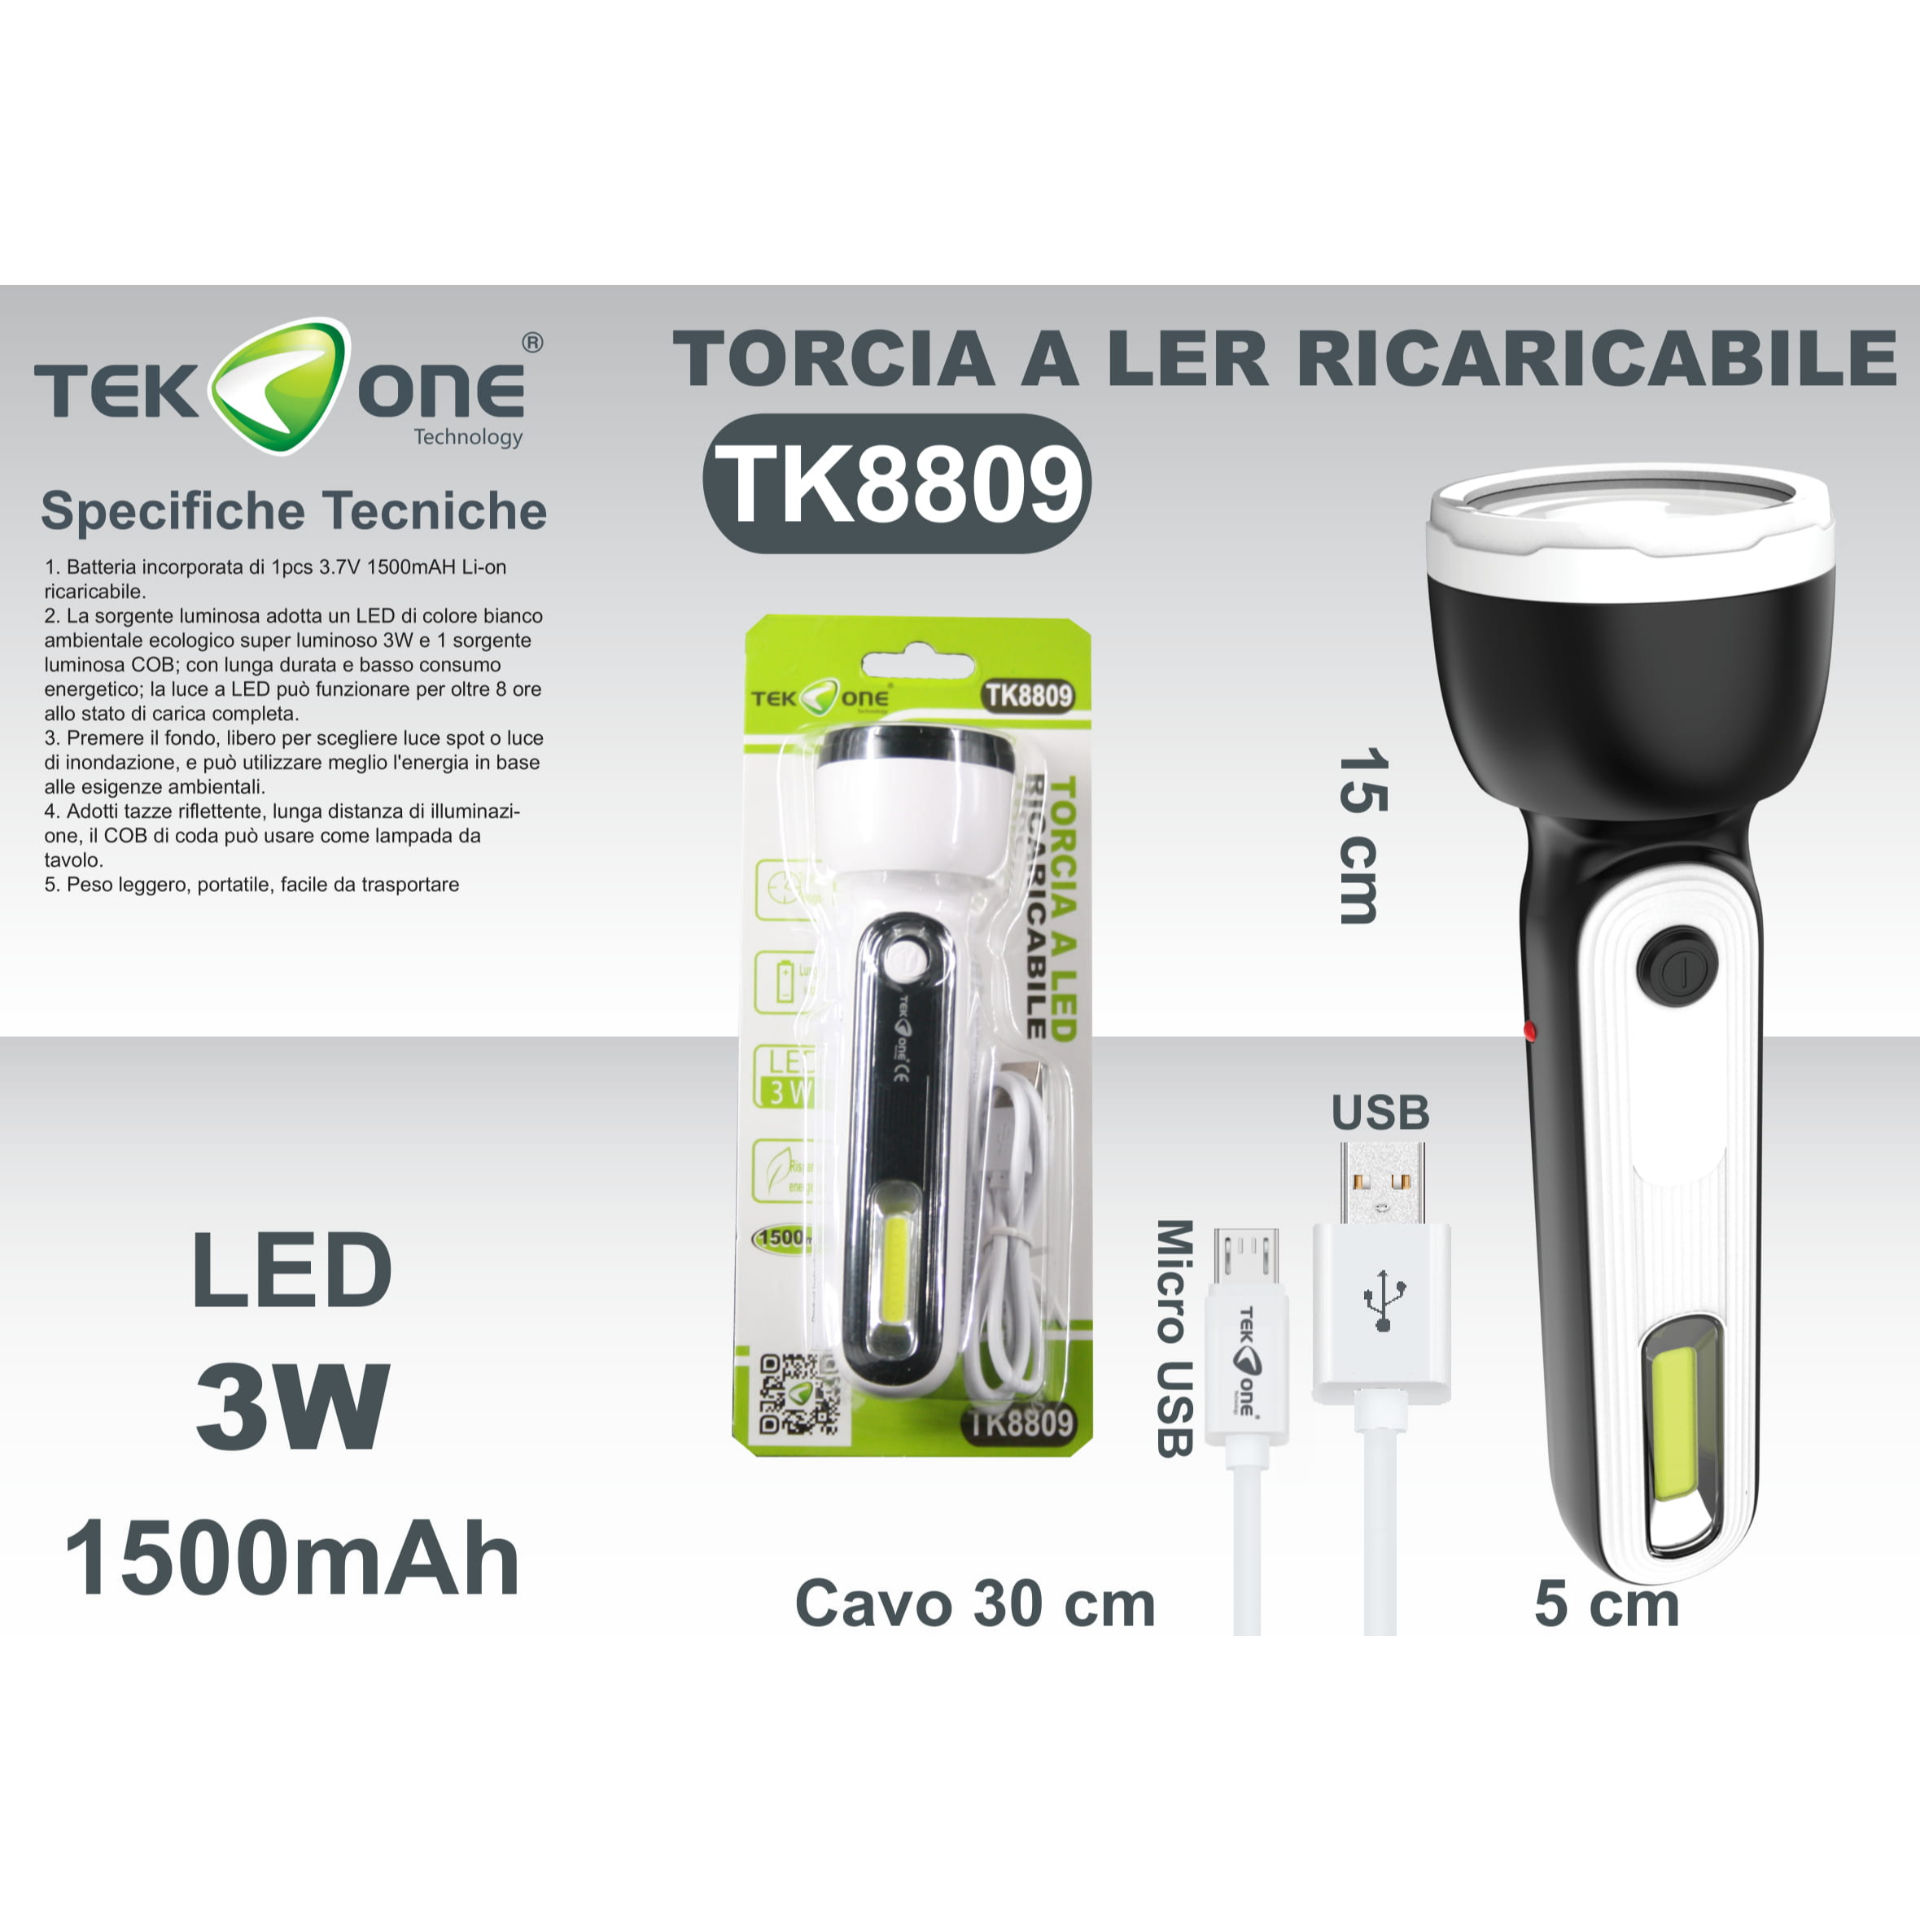 TORCIA A LED RICARICABILE USB 3WTekone